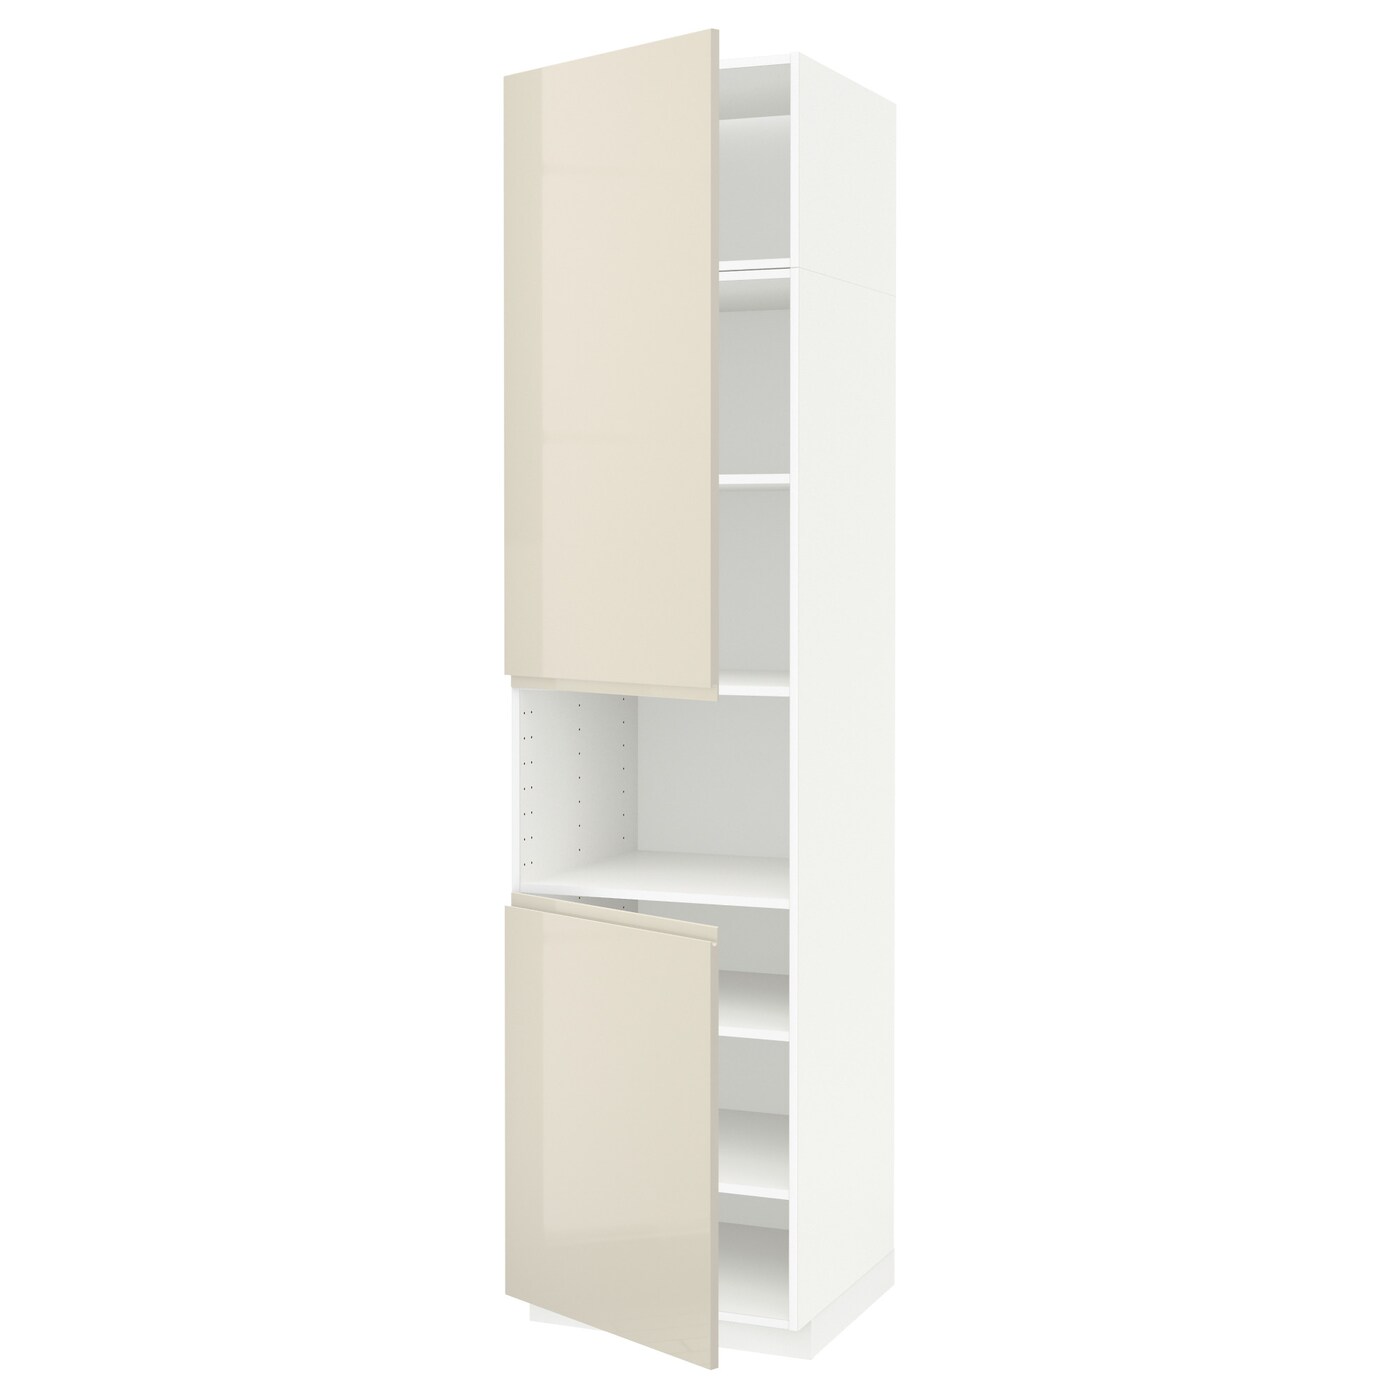 Высокий кухонный шкаф с полками - IKEA METOD/МЕТОД ИКЕА, 240х60х60 см, белый/бежевый глянцевый